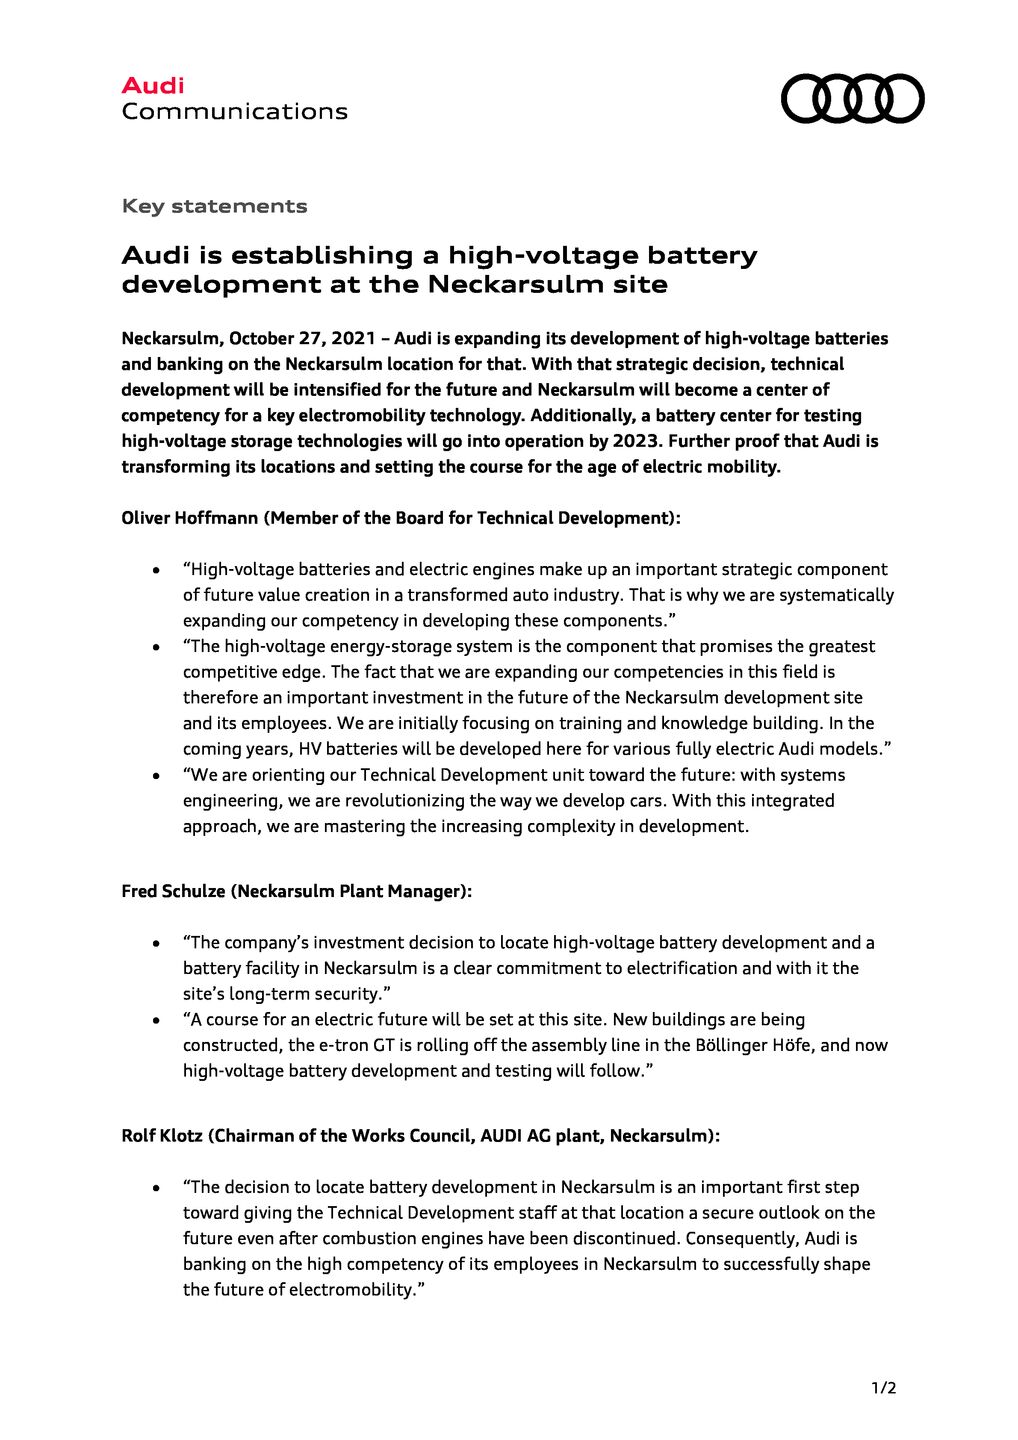 Audi is establishing a high-voltage battery development at the Neckarsulm site